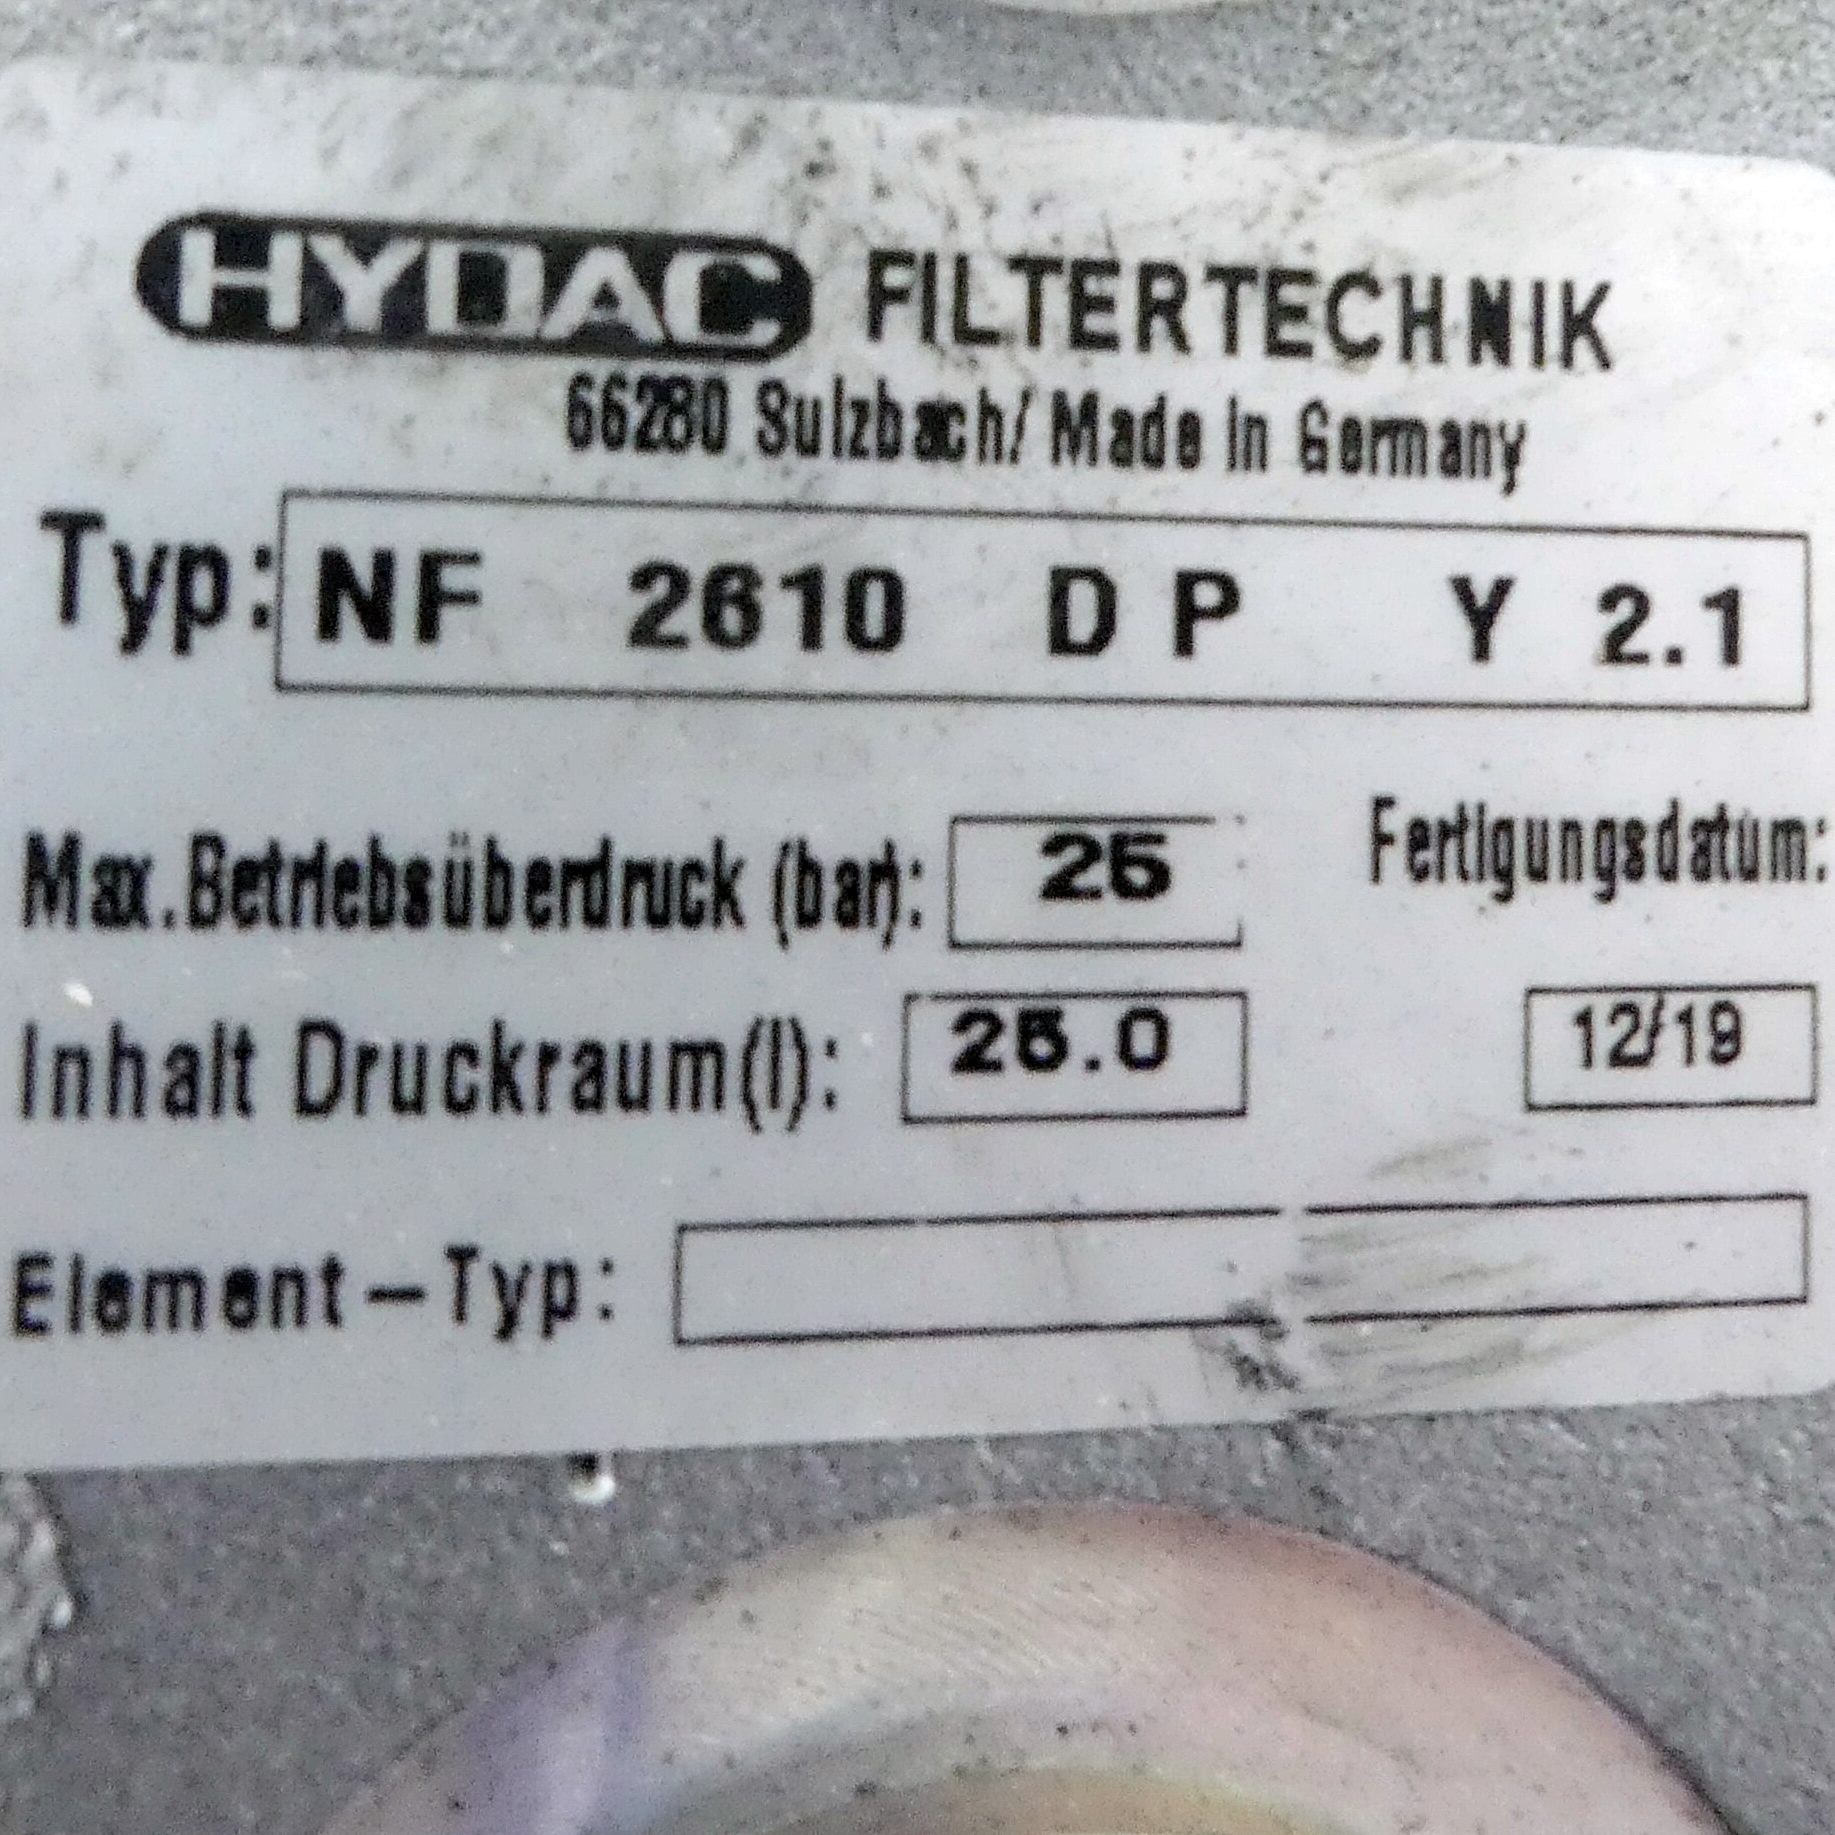 Filtergehäuse NF 2610 DP Y 2.1 